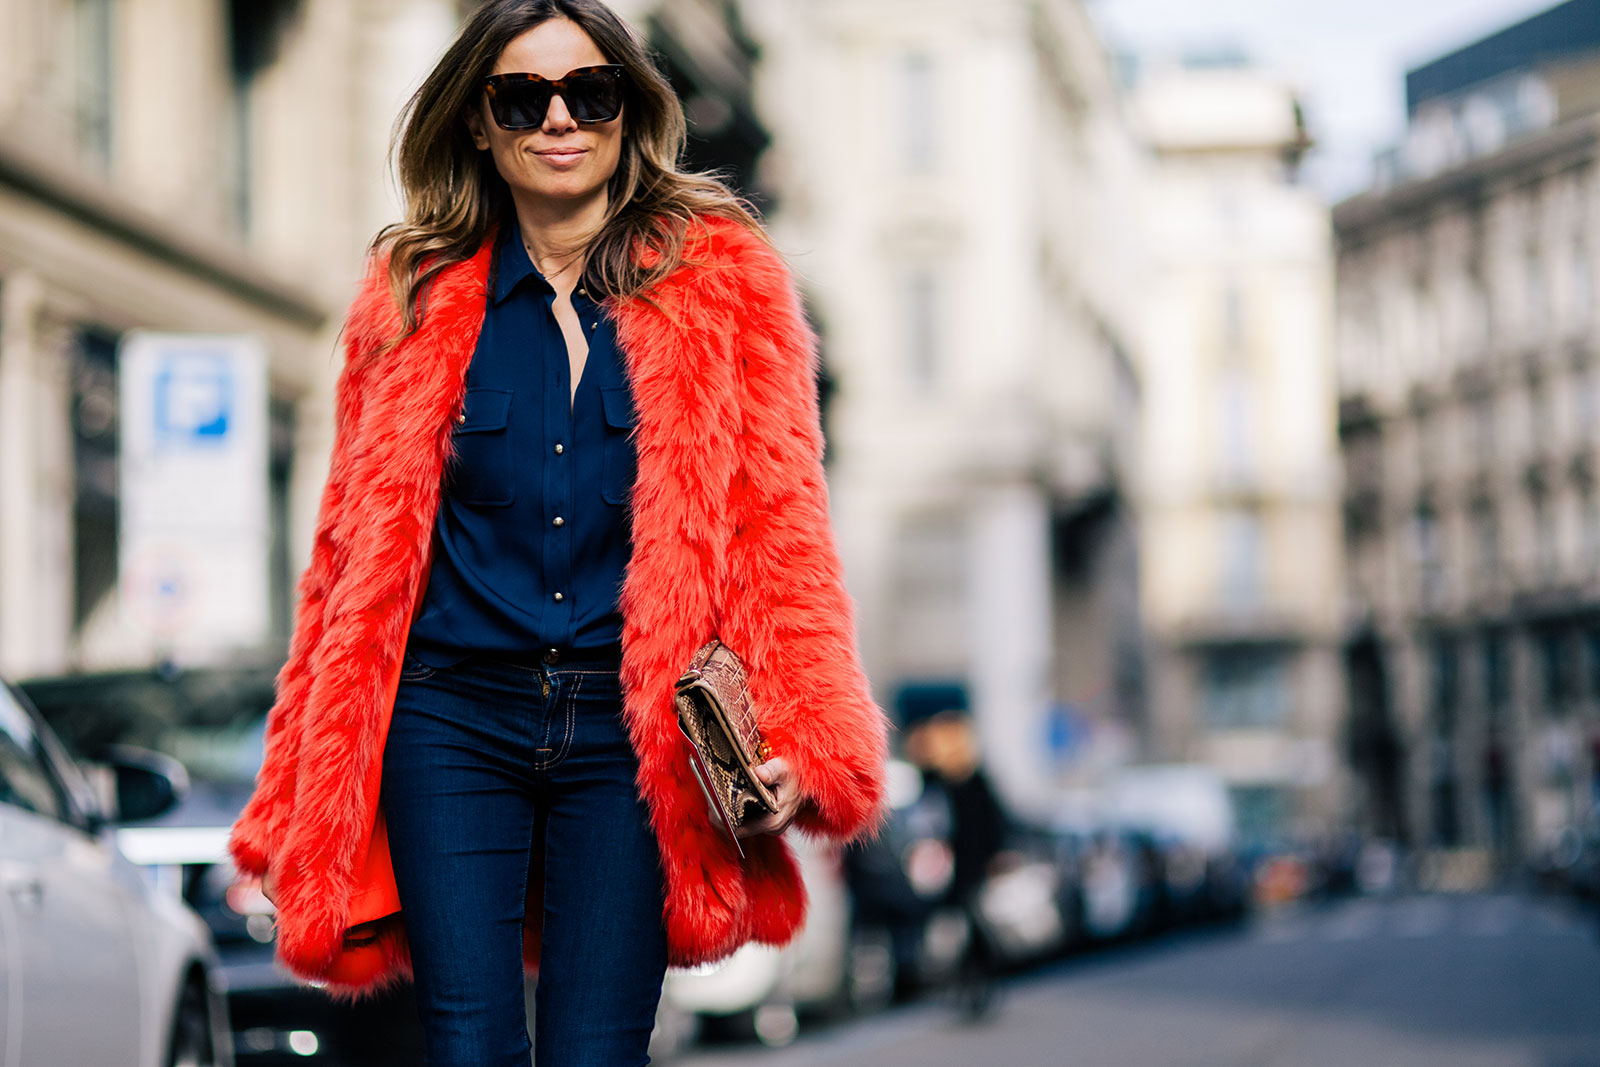 Erica Pelosini wearing jeans and fur jacket in Milan, Italy